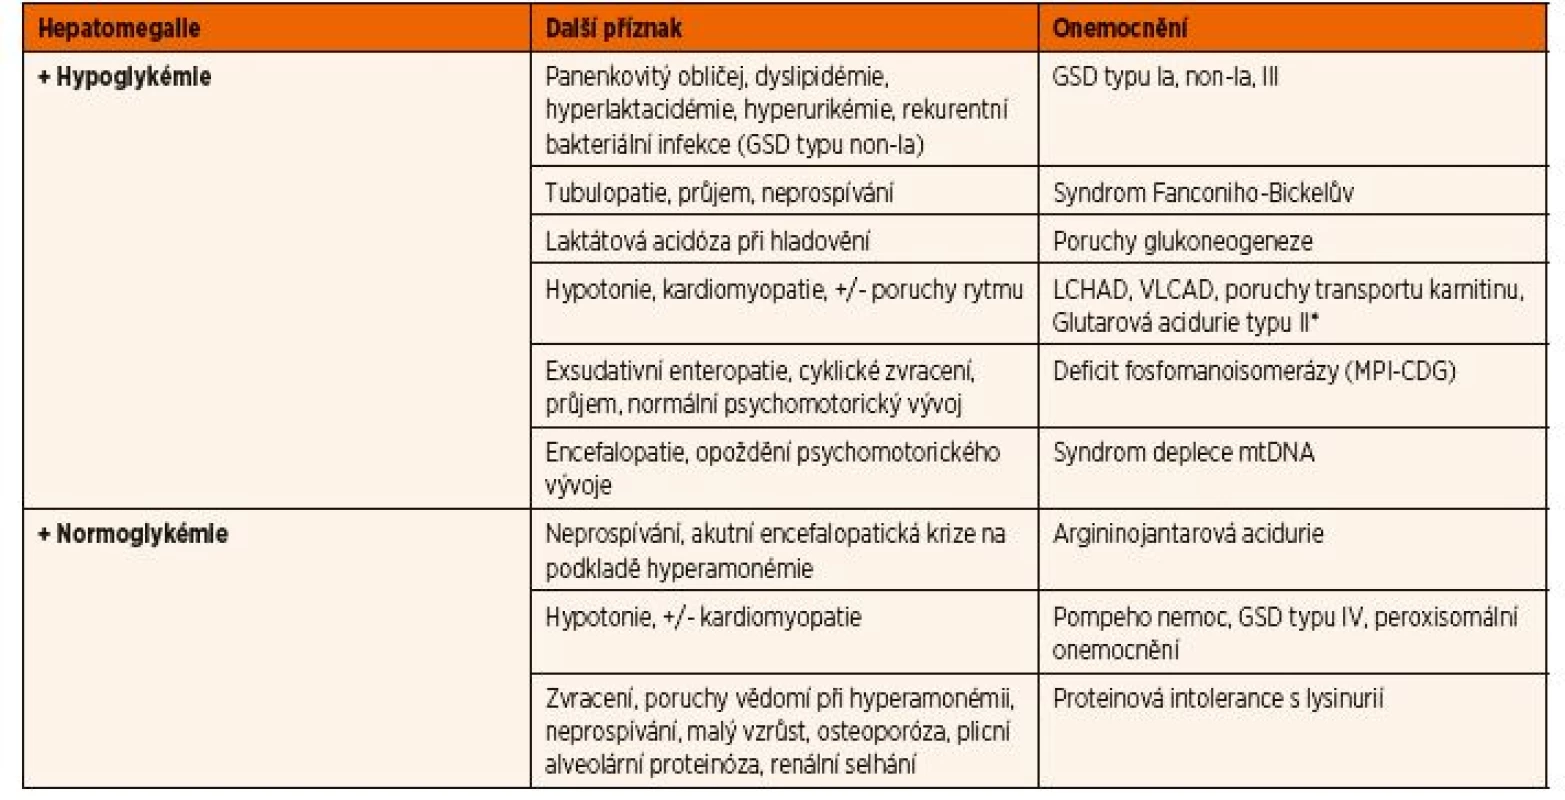 Diferenciální diagnostika hepatomegalie v závislosti na glykémii.